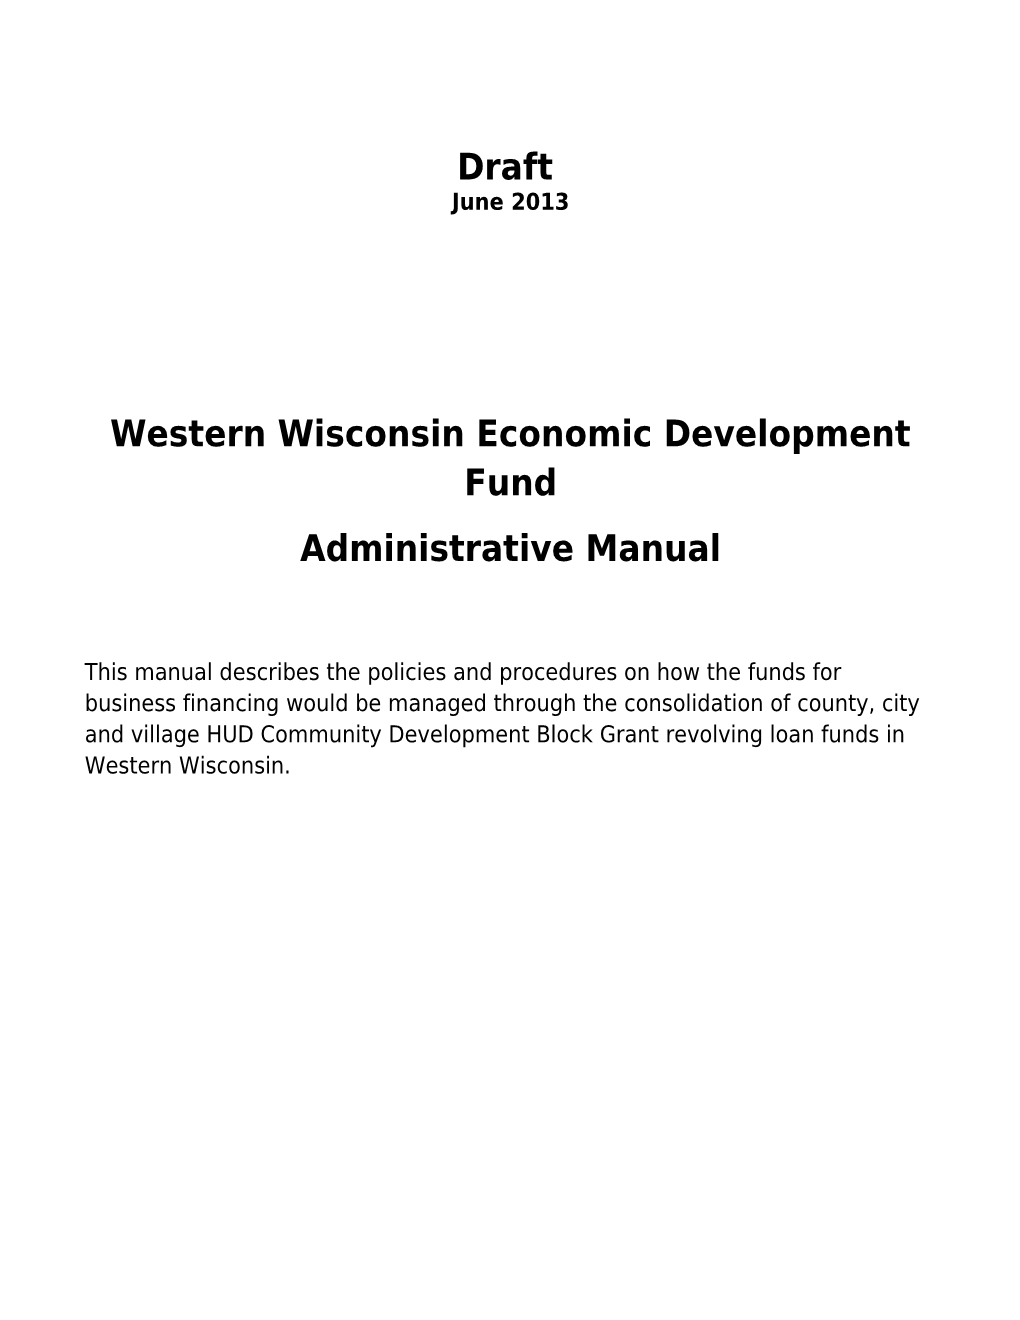 Western Wisconsin Economic Development Fund Administrative Manual